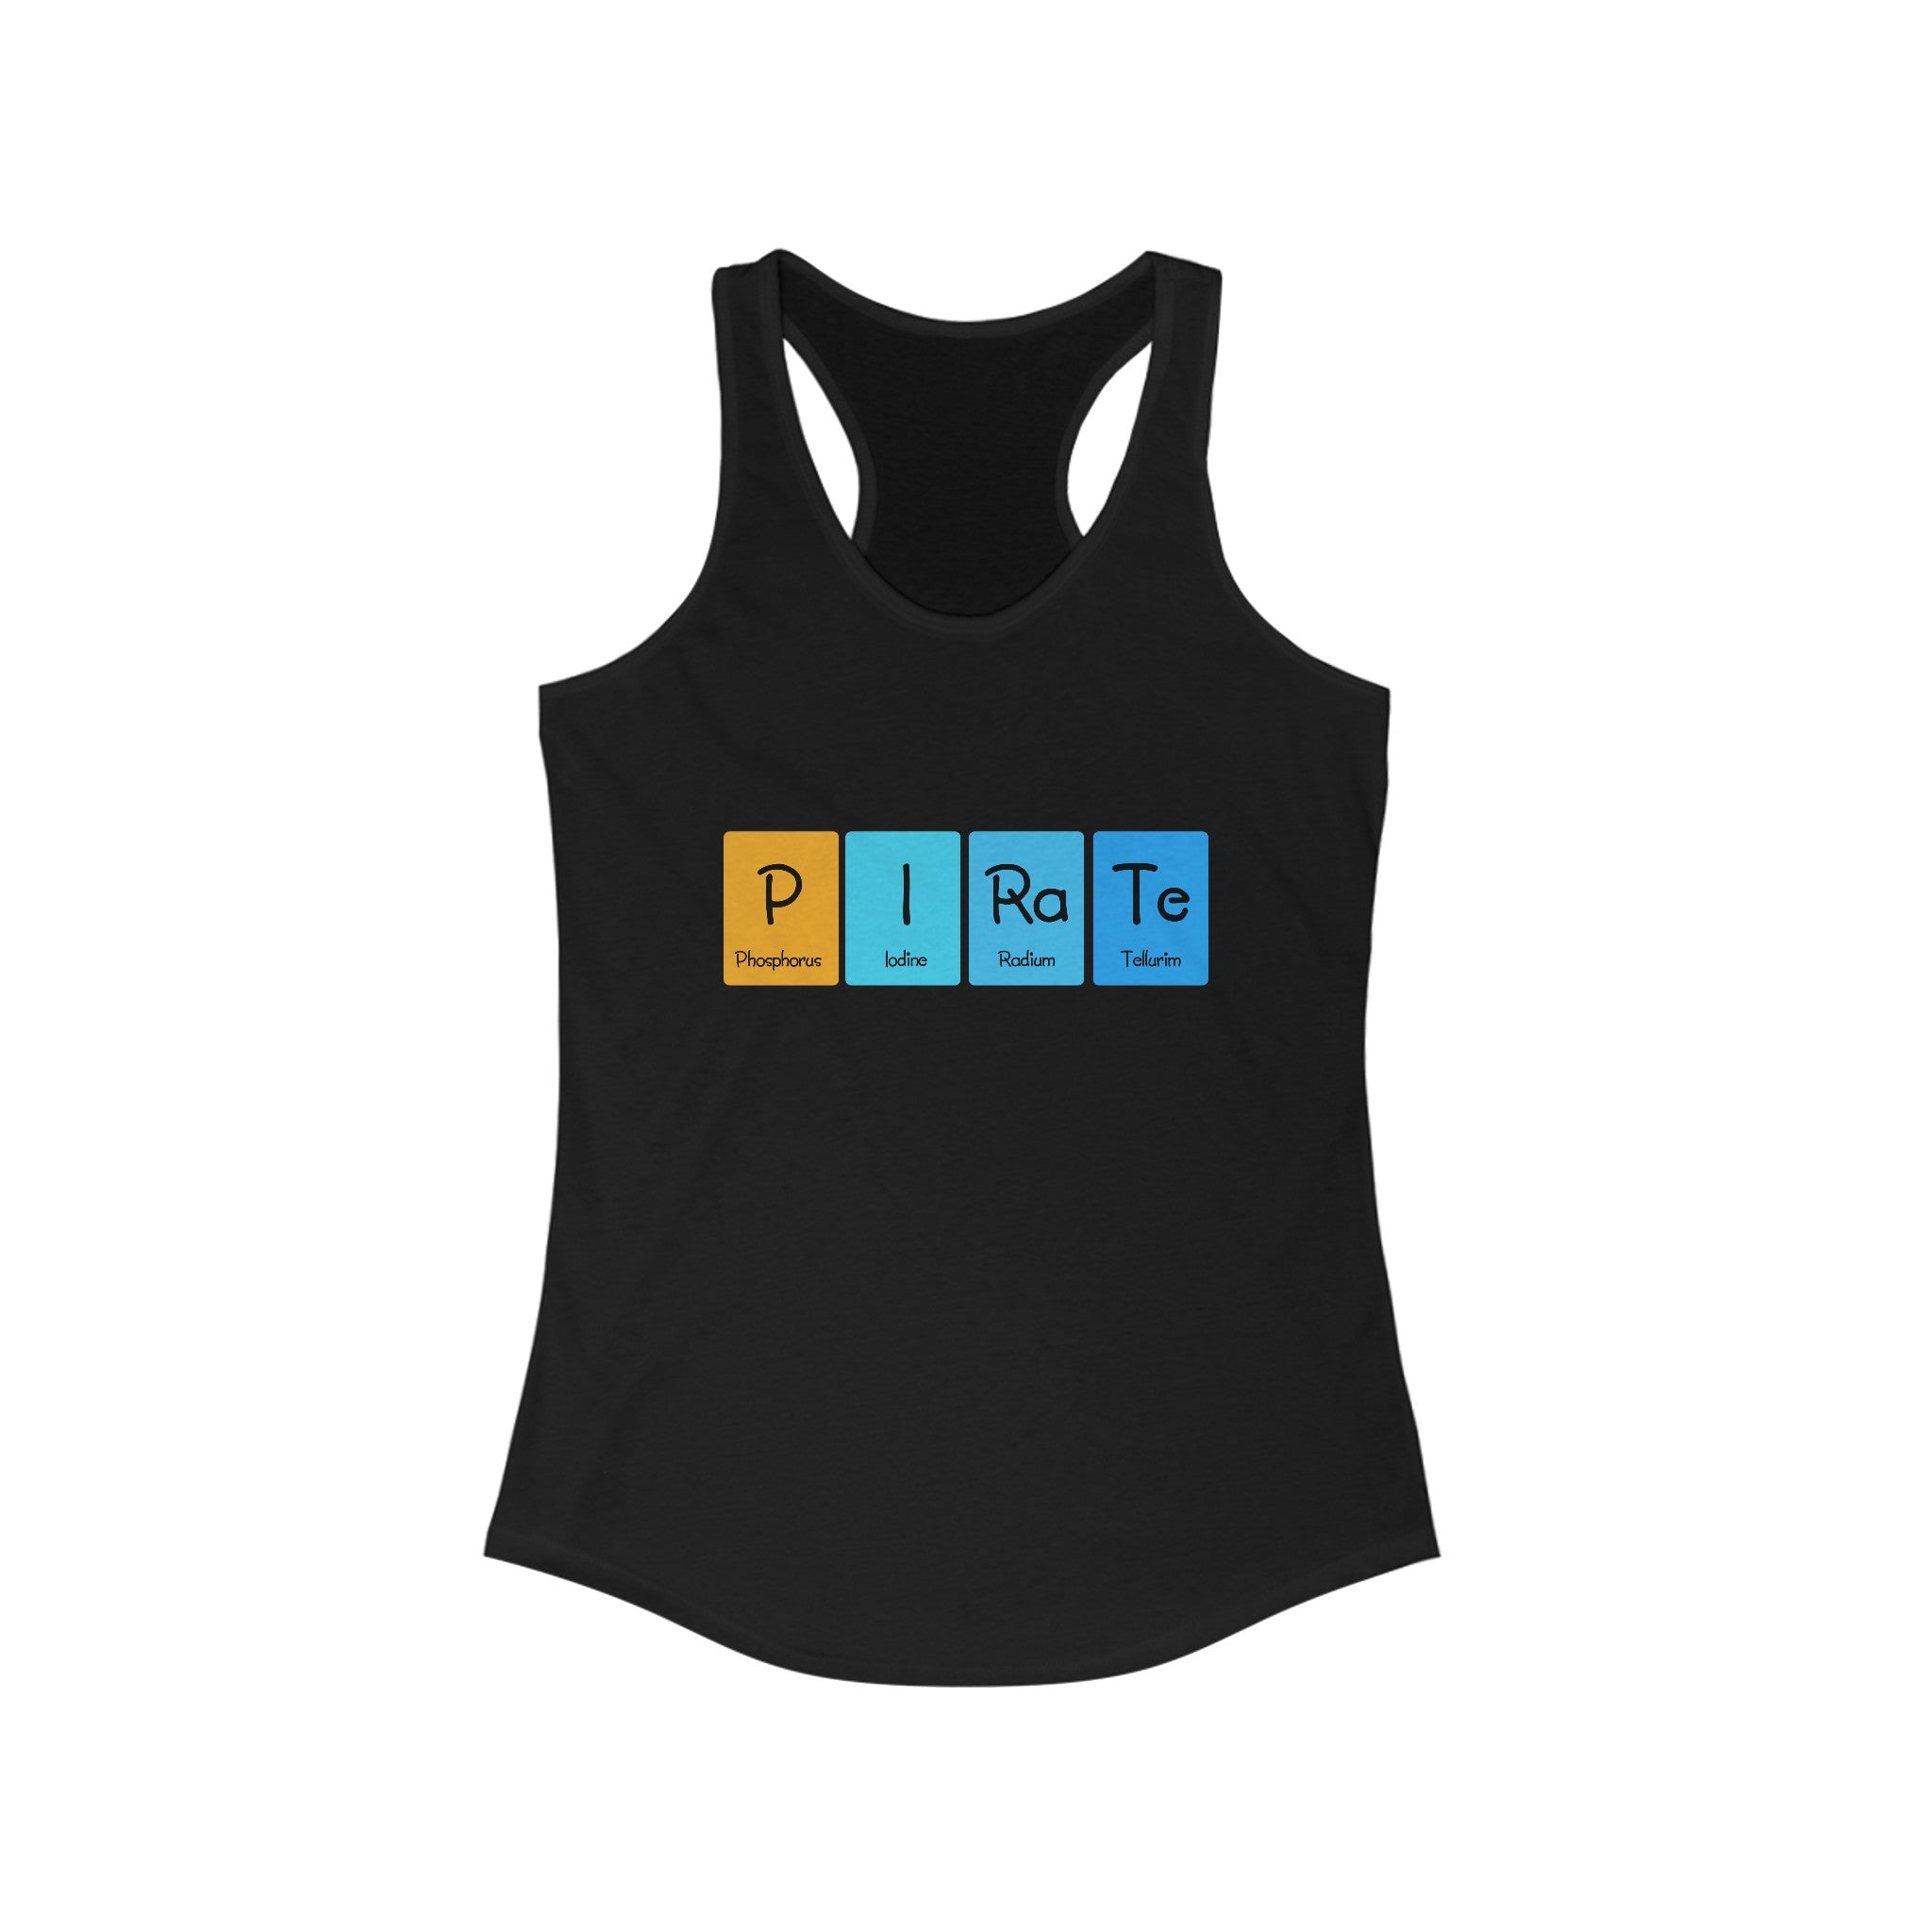 Lightweight black P-I-Ra-Te - Women's Racerback Tank with "Pirate" spelled using periodic table elements (Phosphorus, Iodine, Radium, Tellurium) in colored blocks. Perfect for an active lifestyle.